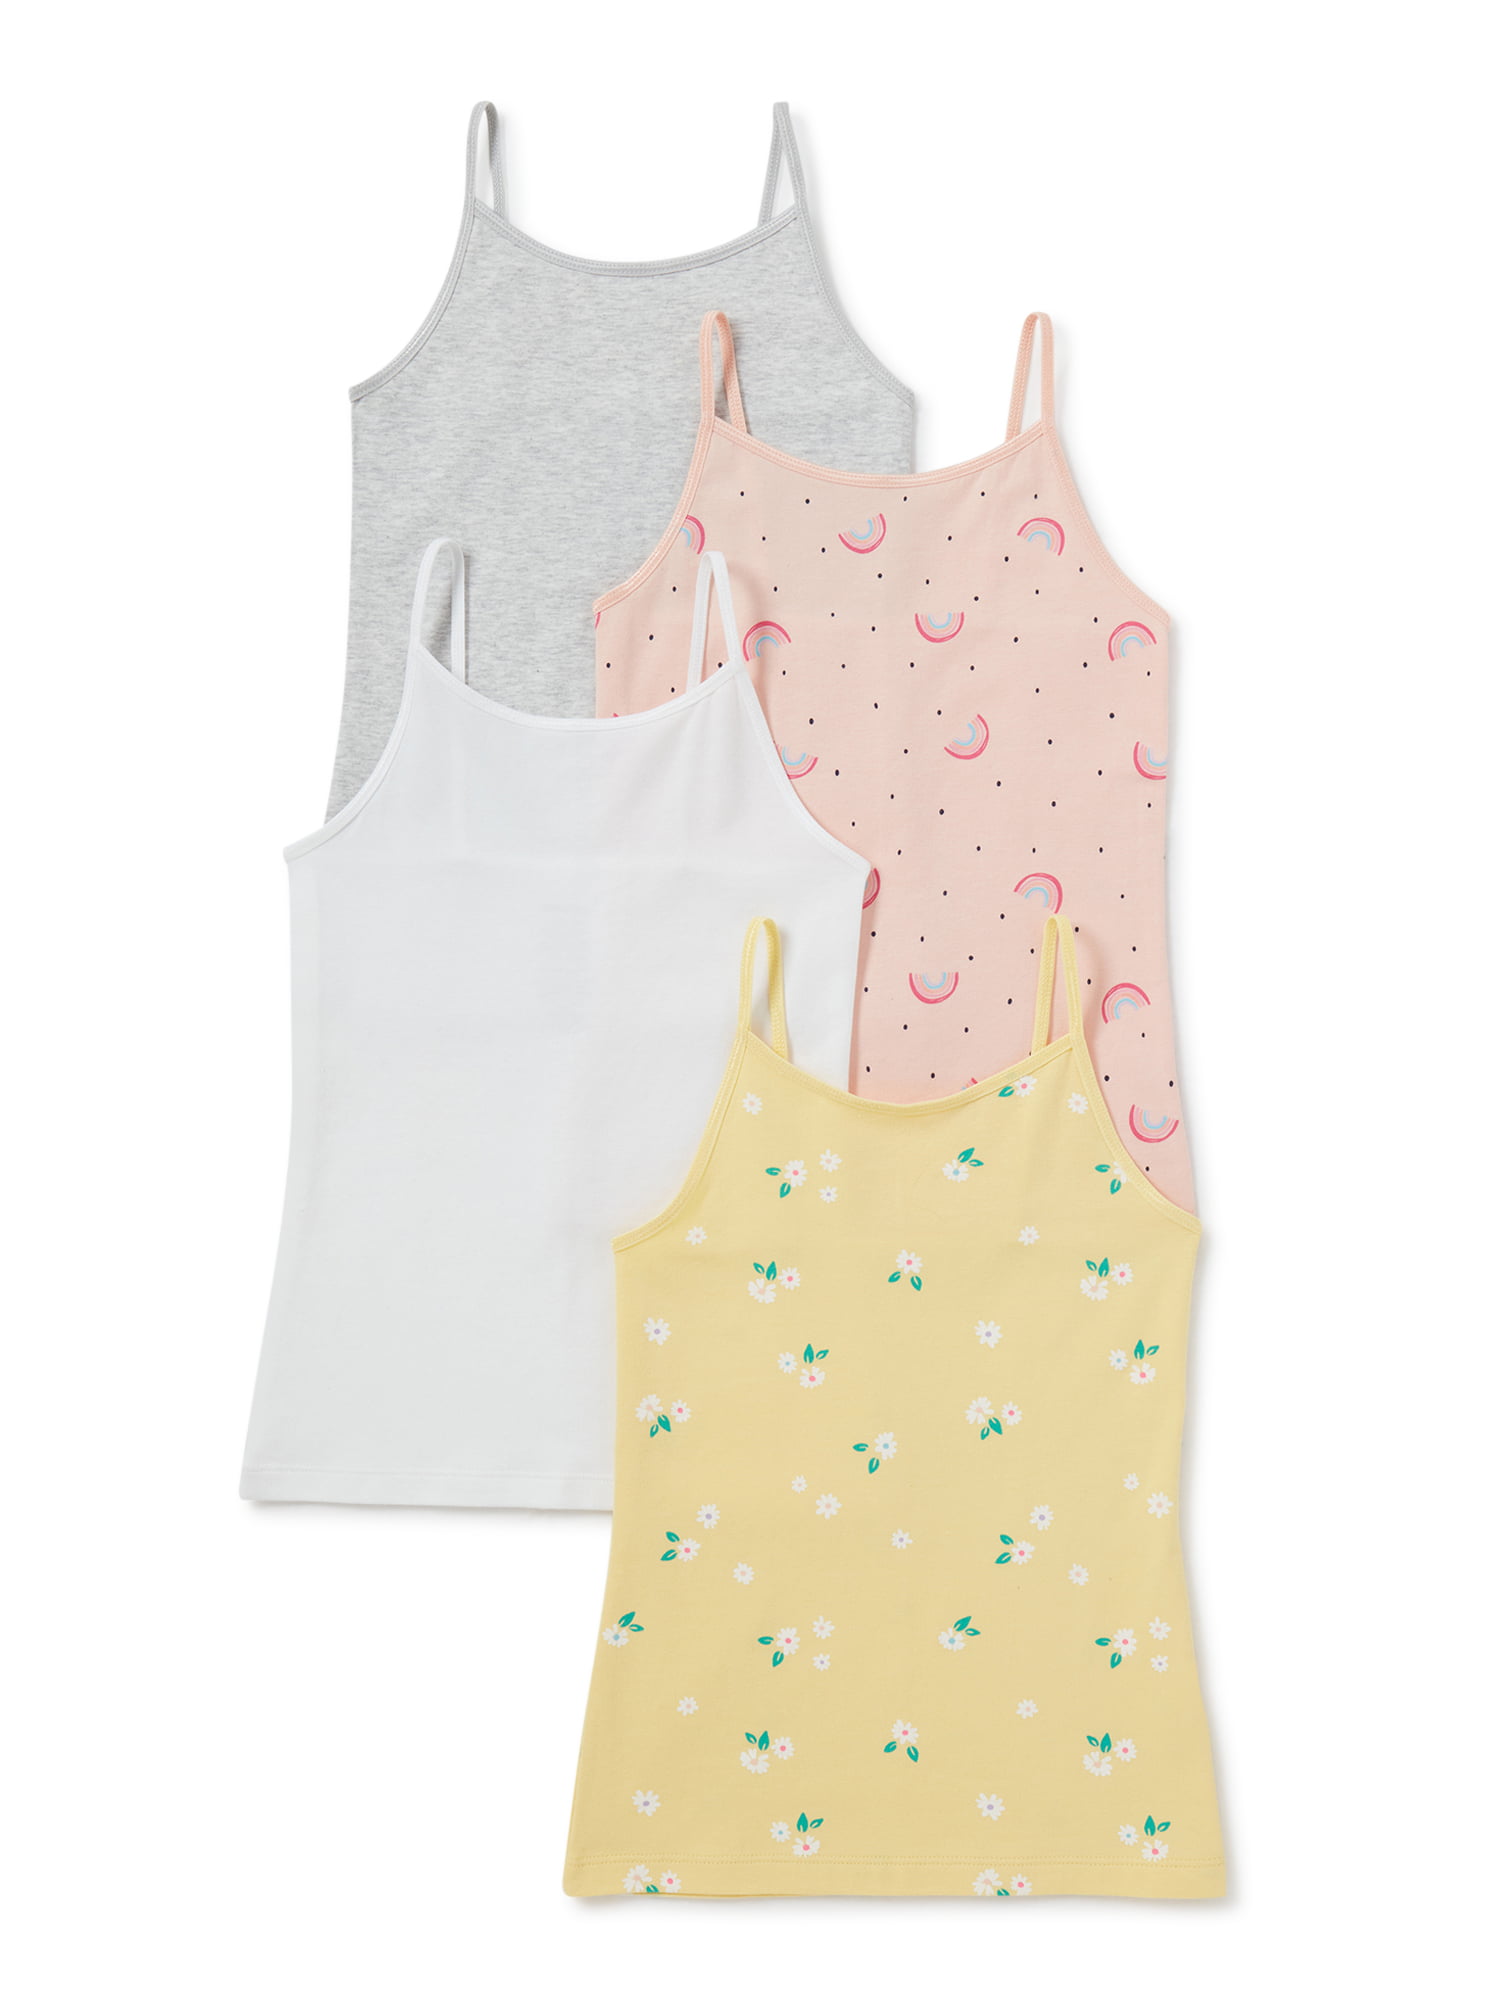 Cami 4-Pack  Toddler Girls Tank Top Undershirt Spaghetti Strap Camisole Kids New 